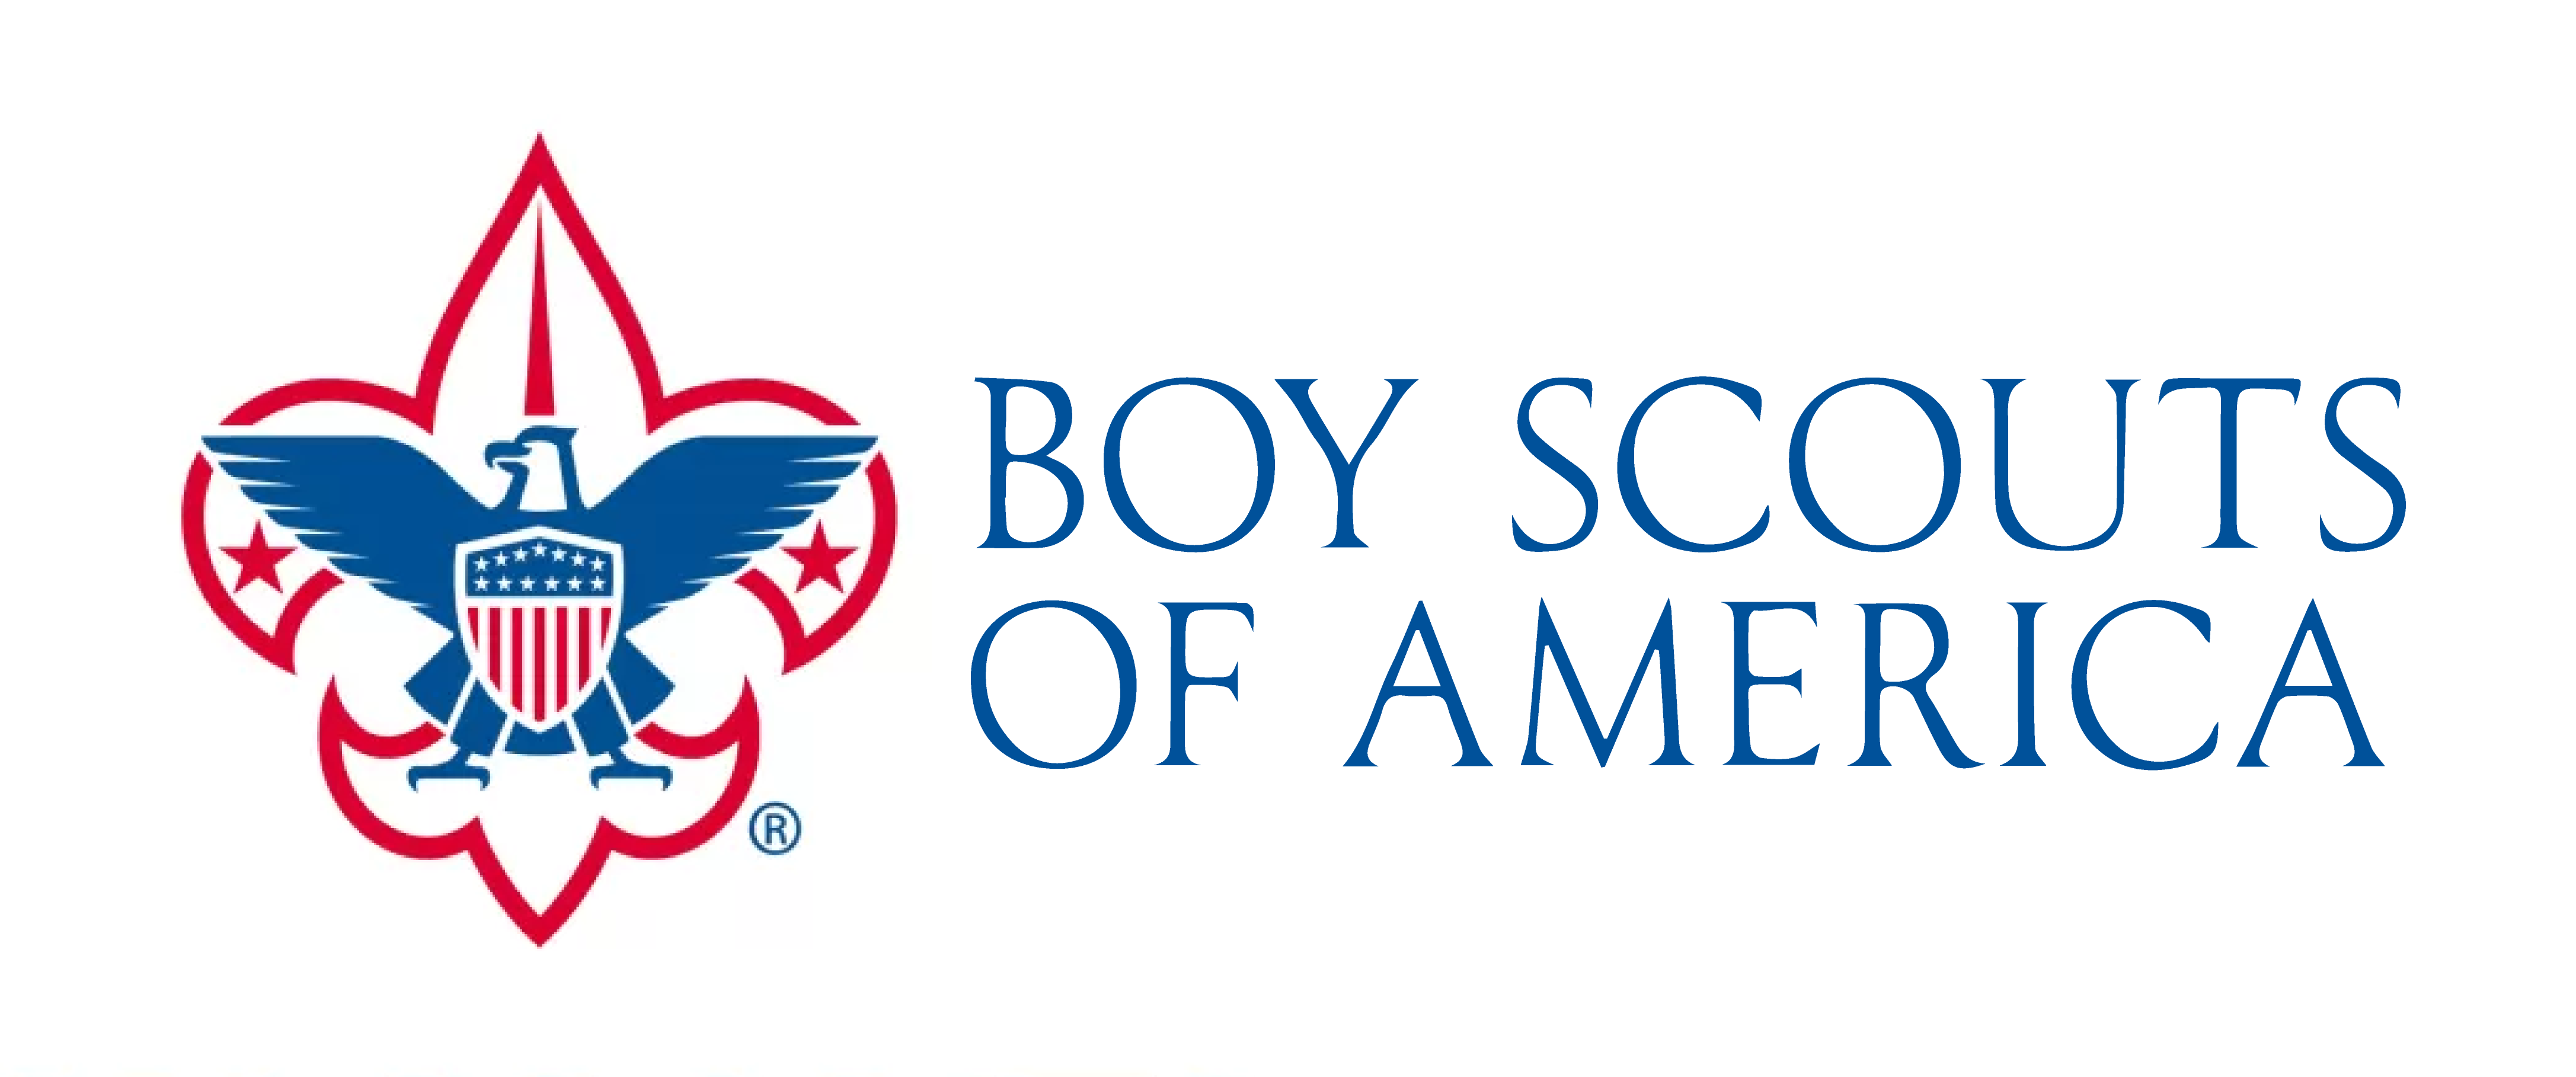 Flor de lis logo of the Boy Scouts of America, BSA.